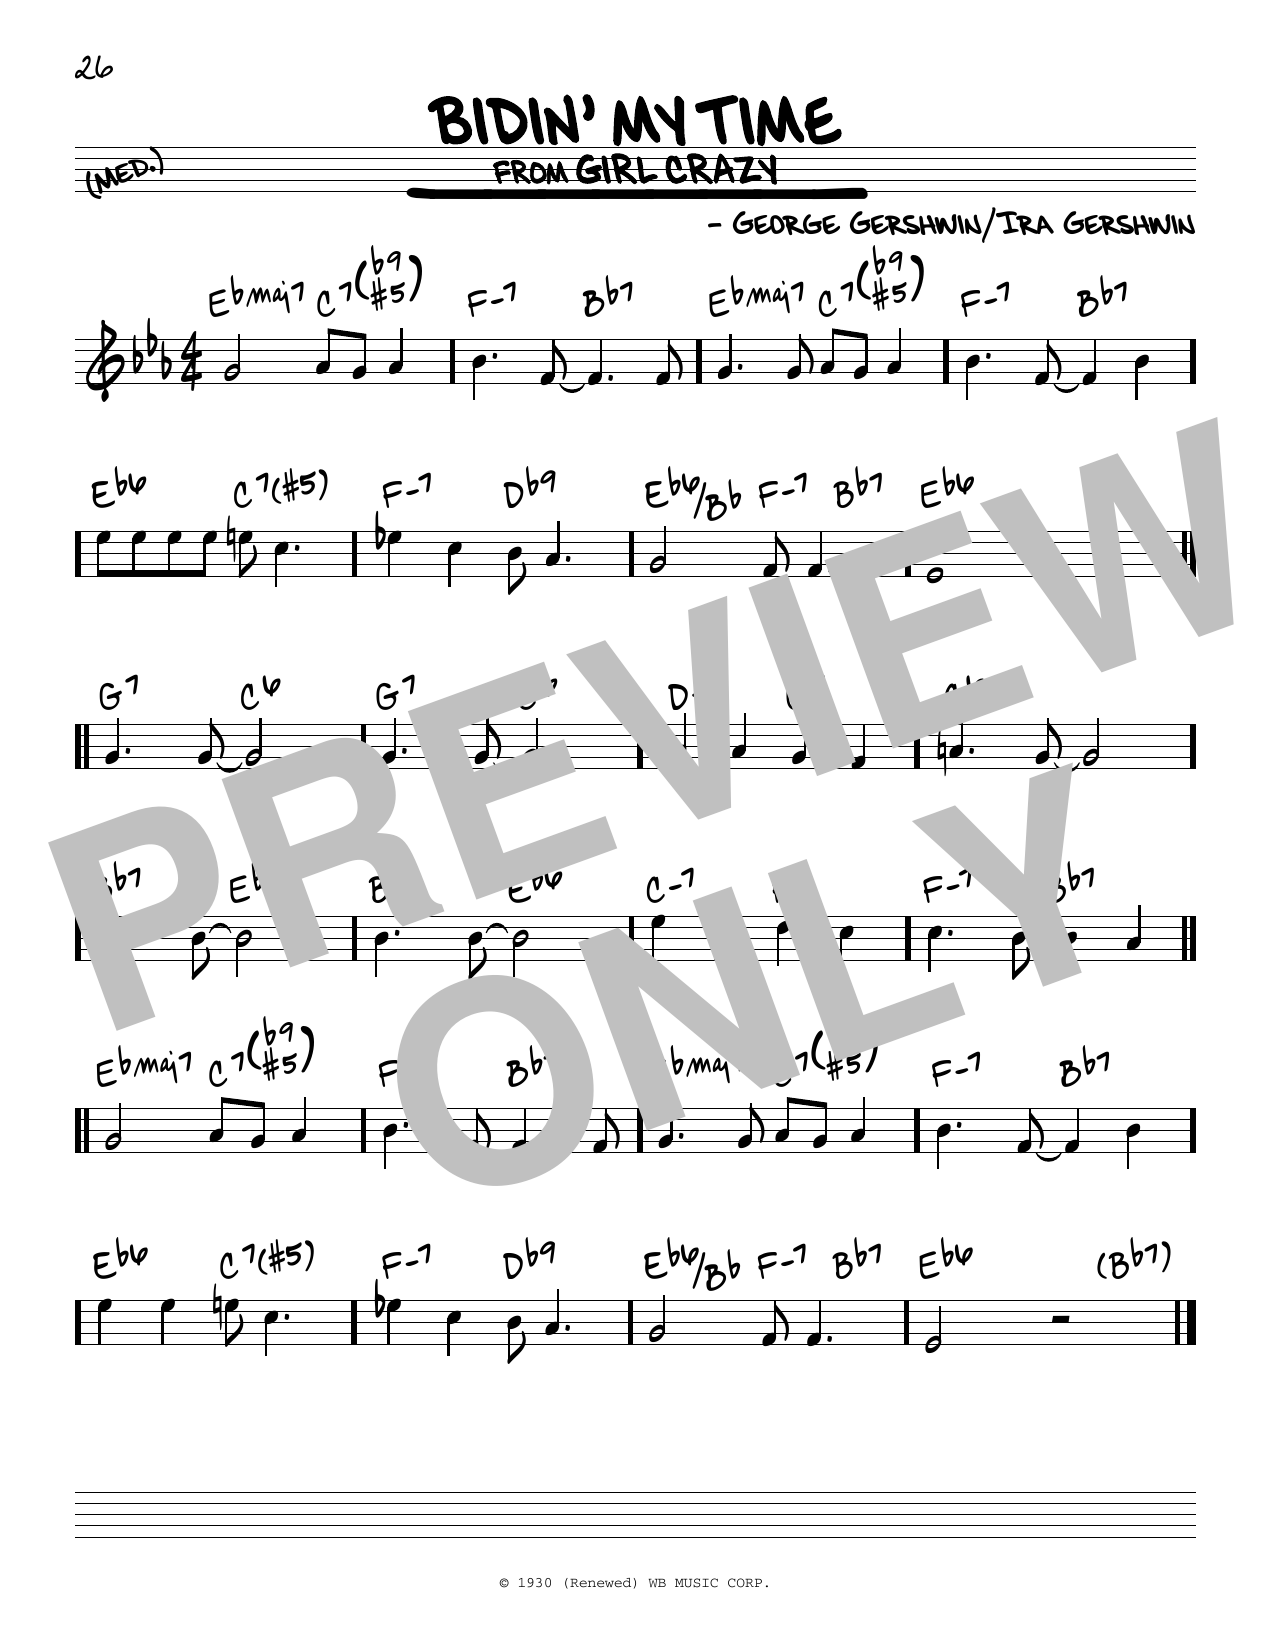 Download George Gershwin Bidin' My Time Sheet Music